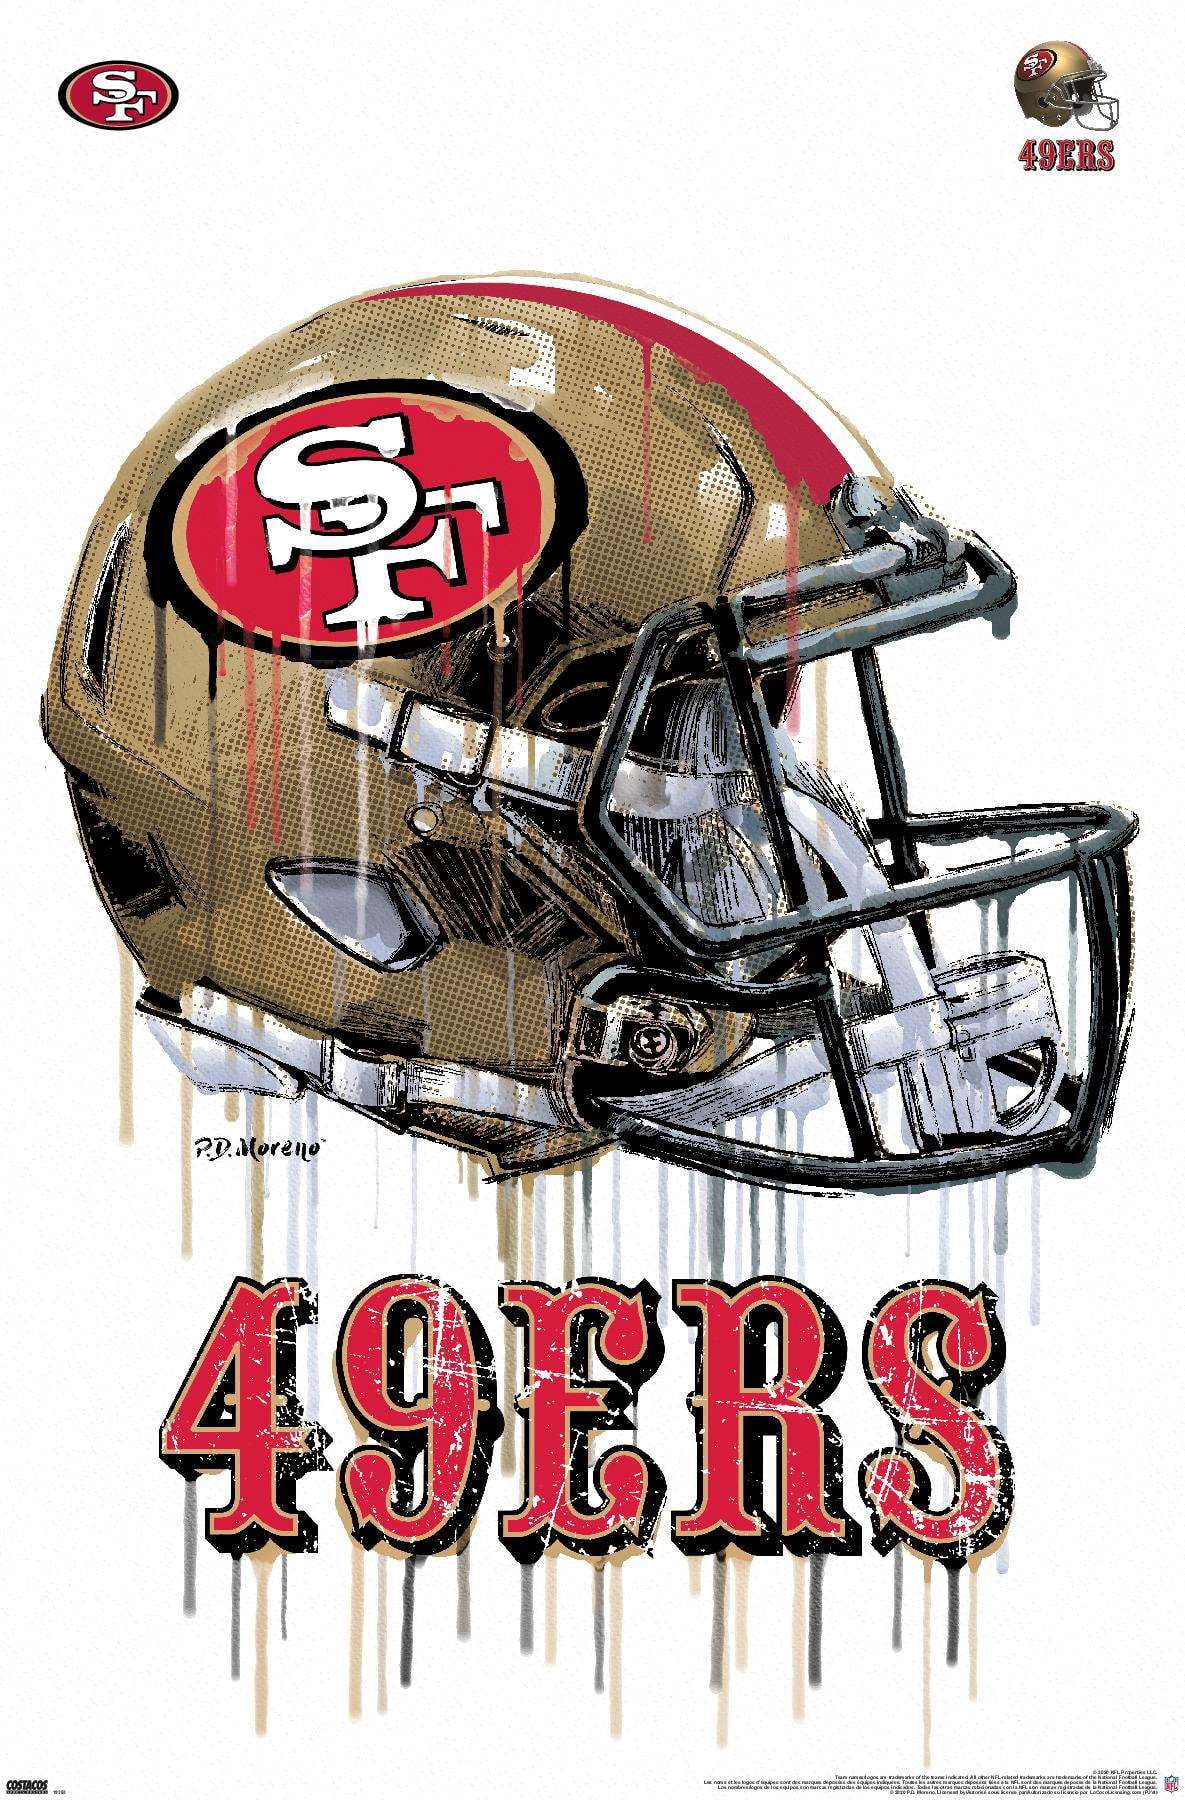 Trends International NFL Los Angeles Rams - Commemorative Super Bowl LVI  Champions Team Logo Wall Poster, 22.375 x 34, Premium Unframed Version